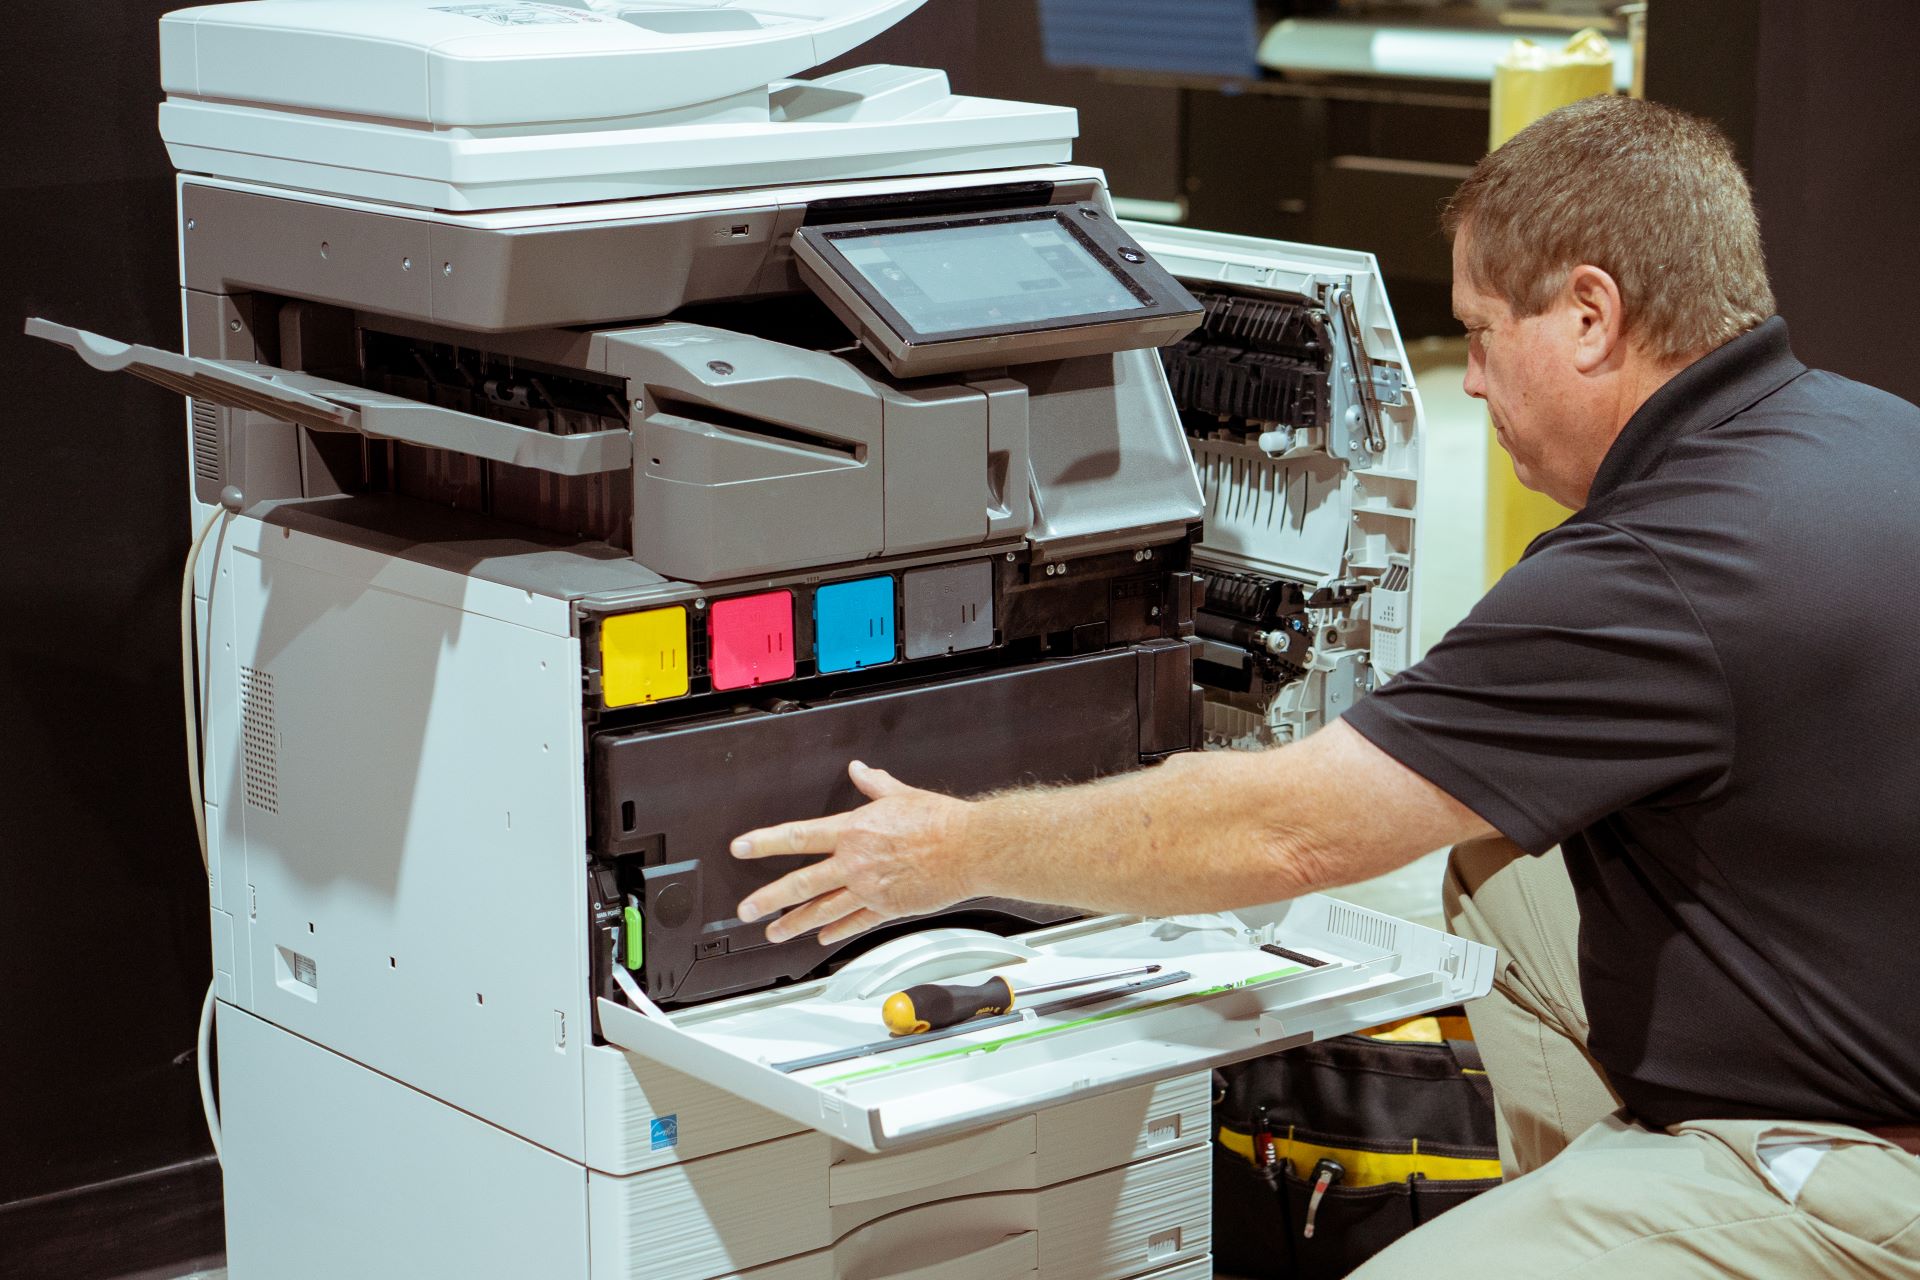 Bayne's service technician repairing a copier